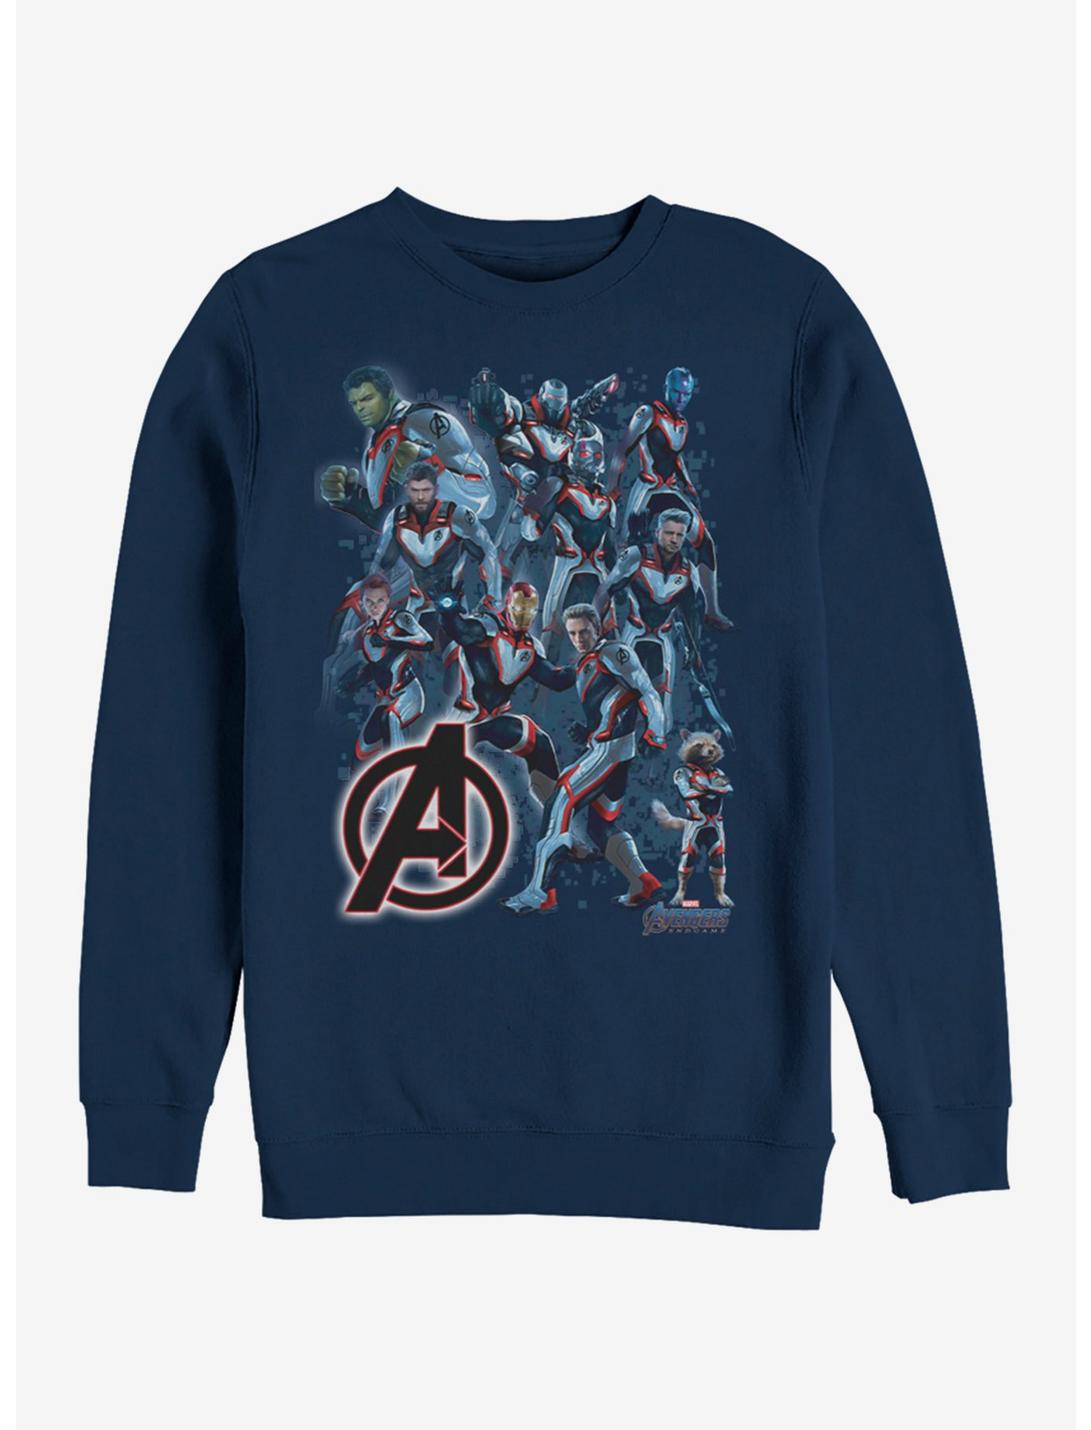 Marvel Avengers: Endgame Suit Group Navy Blue Sweatshirt, NAVY, hi-res